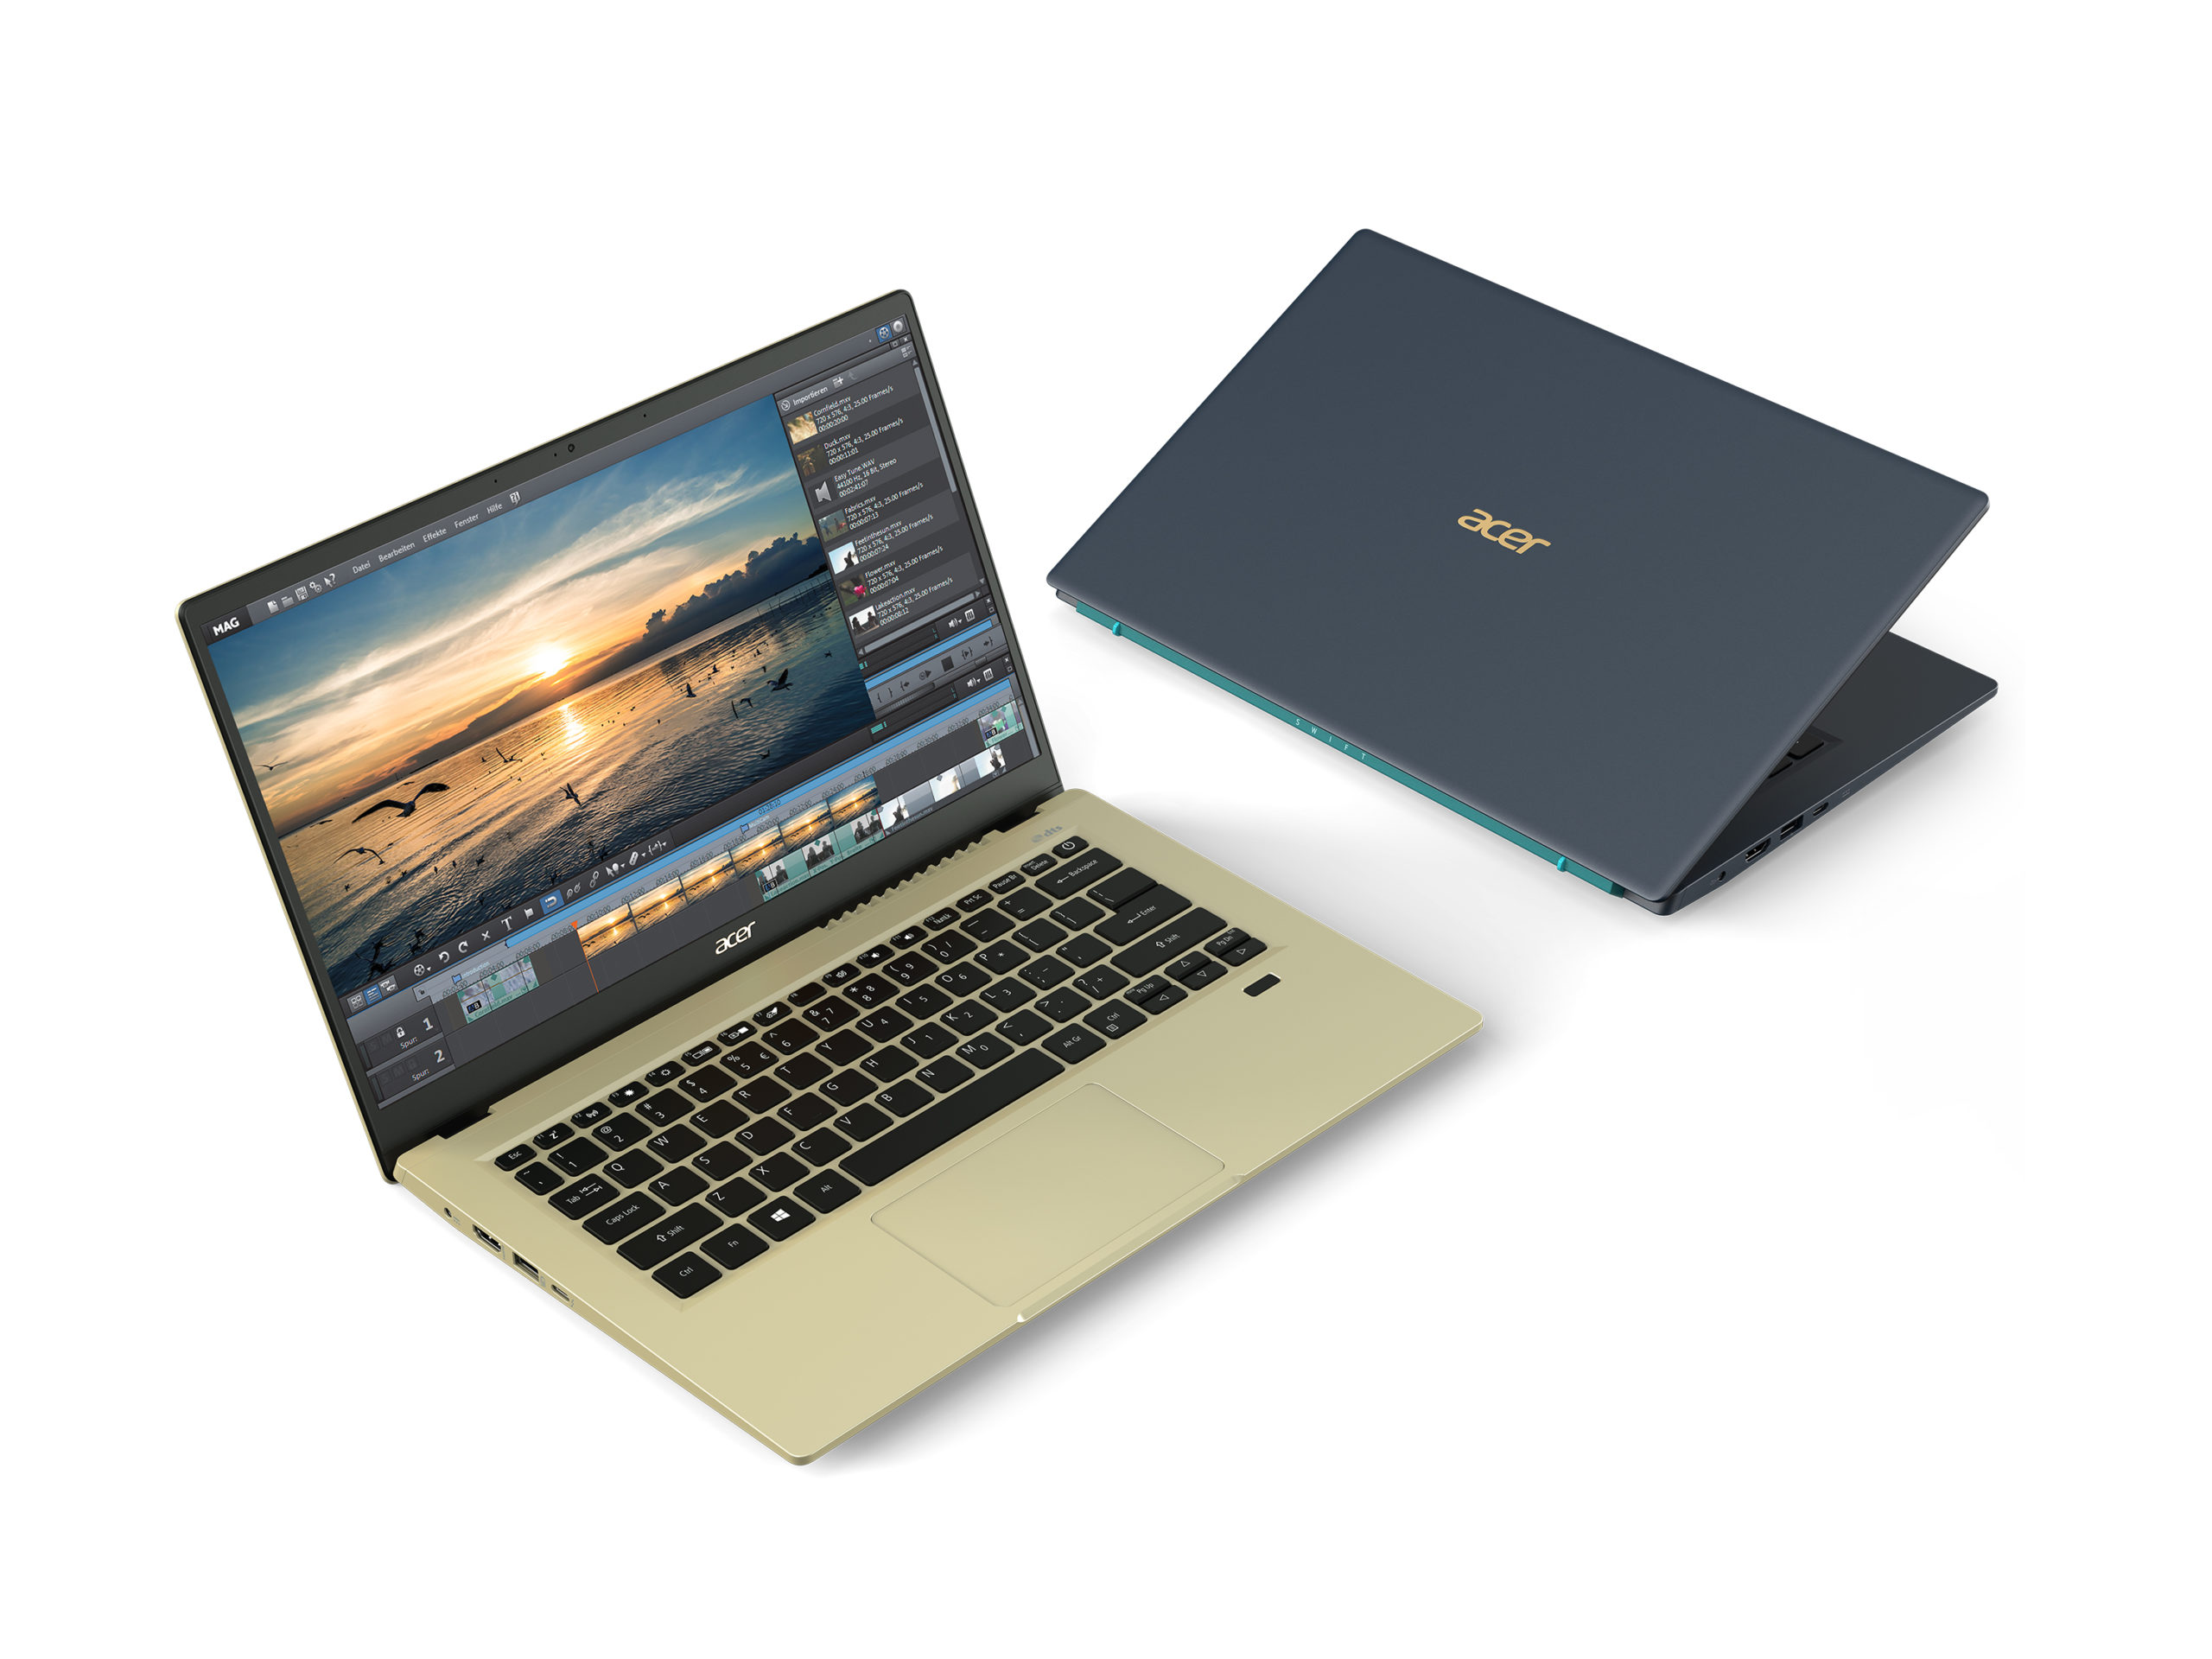 Acer announces latest lineup of consumer laptops, introduces new TravelMate notebooks and Porsche De